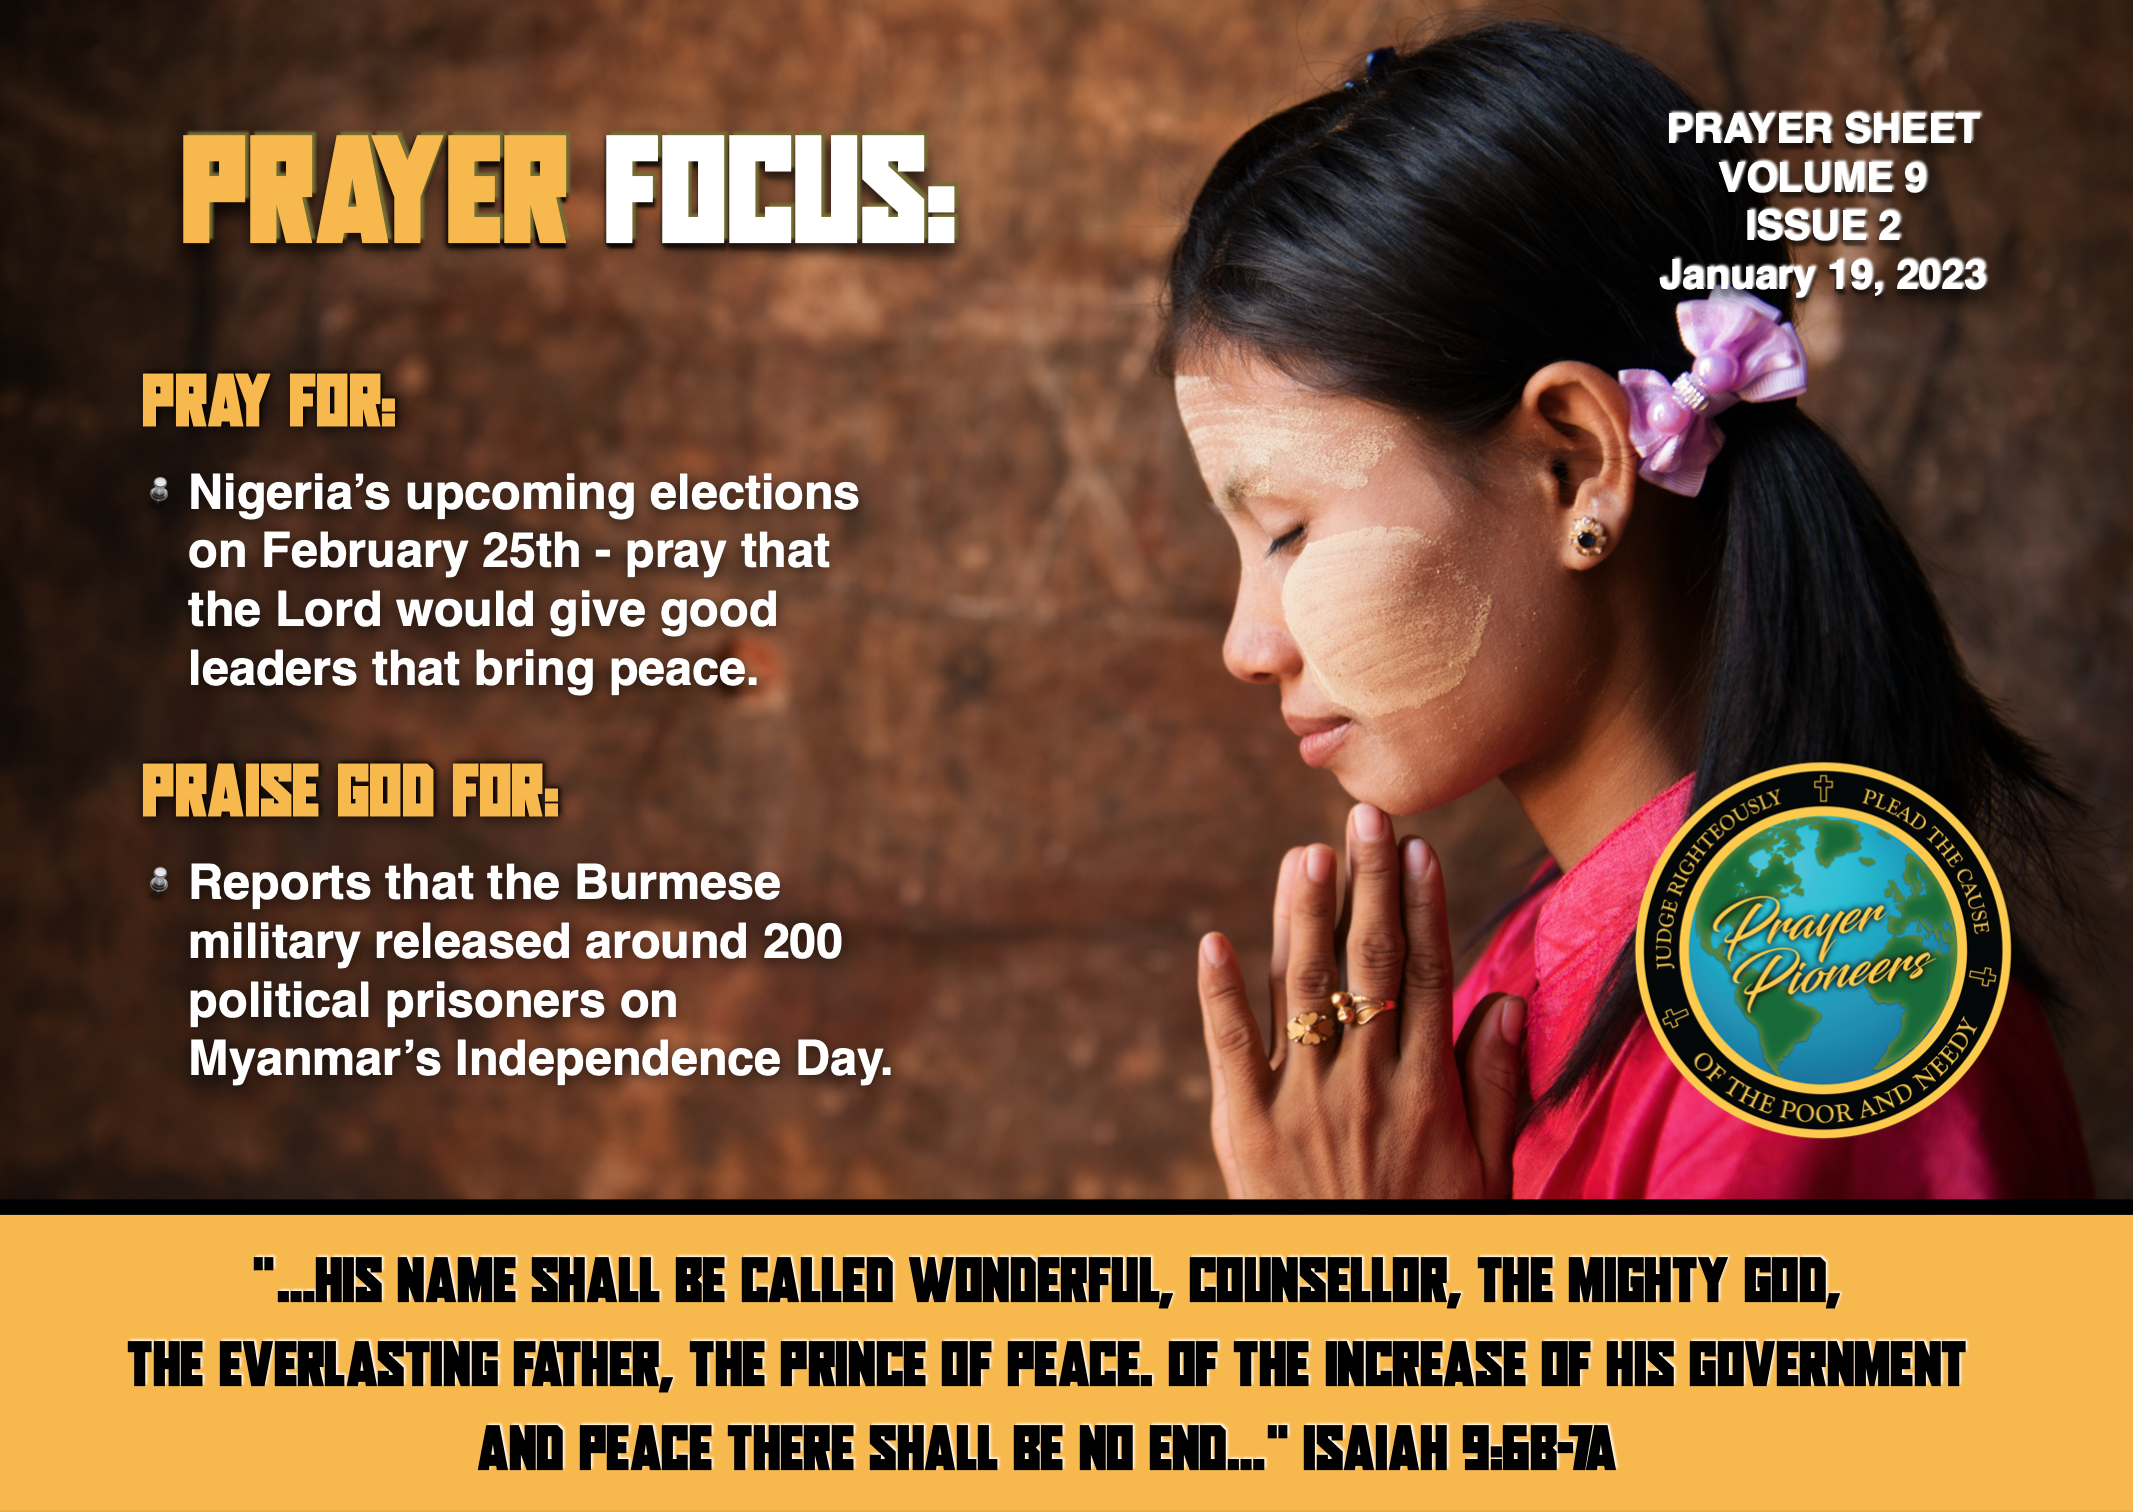 Weekly Prayer Sheet - Volume 9 - Issue 2